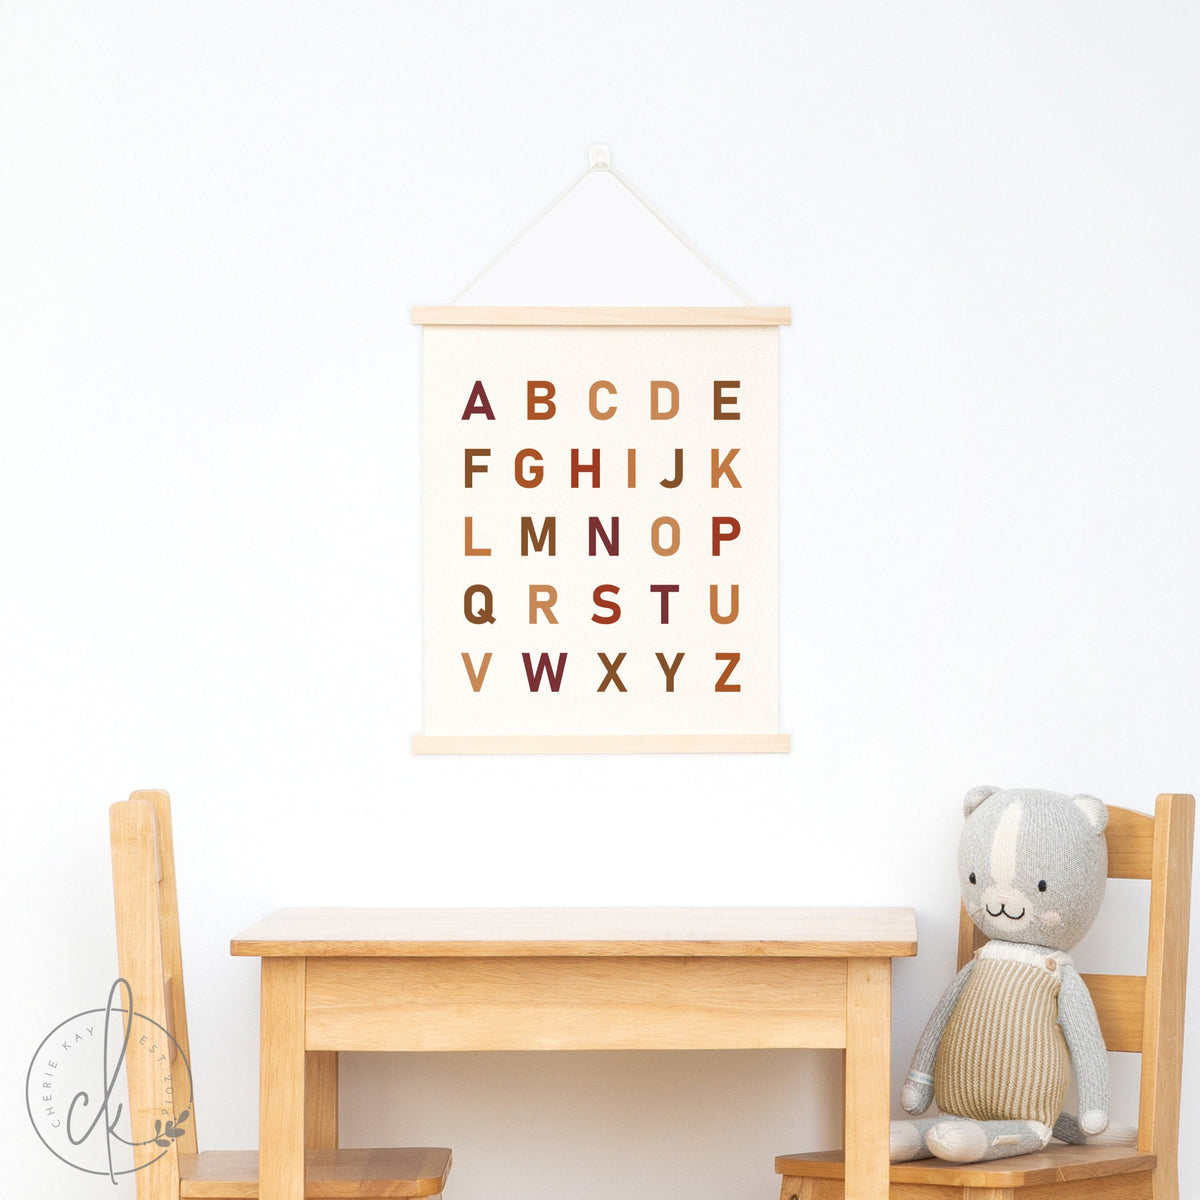 ABC sign | Alphabet Canvas | Fabric Wall Hanging | Kids Room Decor | Playroom Wall Decor | Classroom Decor | Homeschool Decor